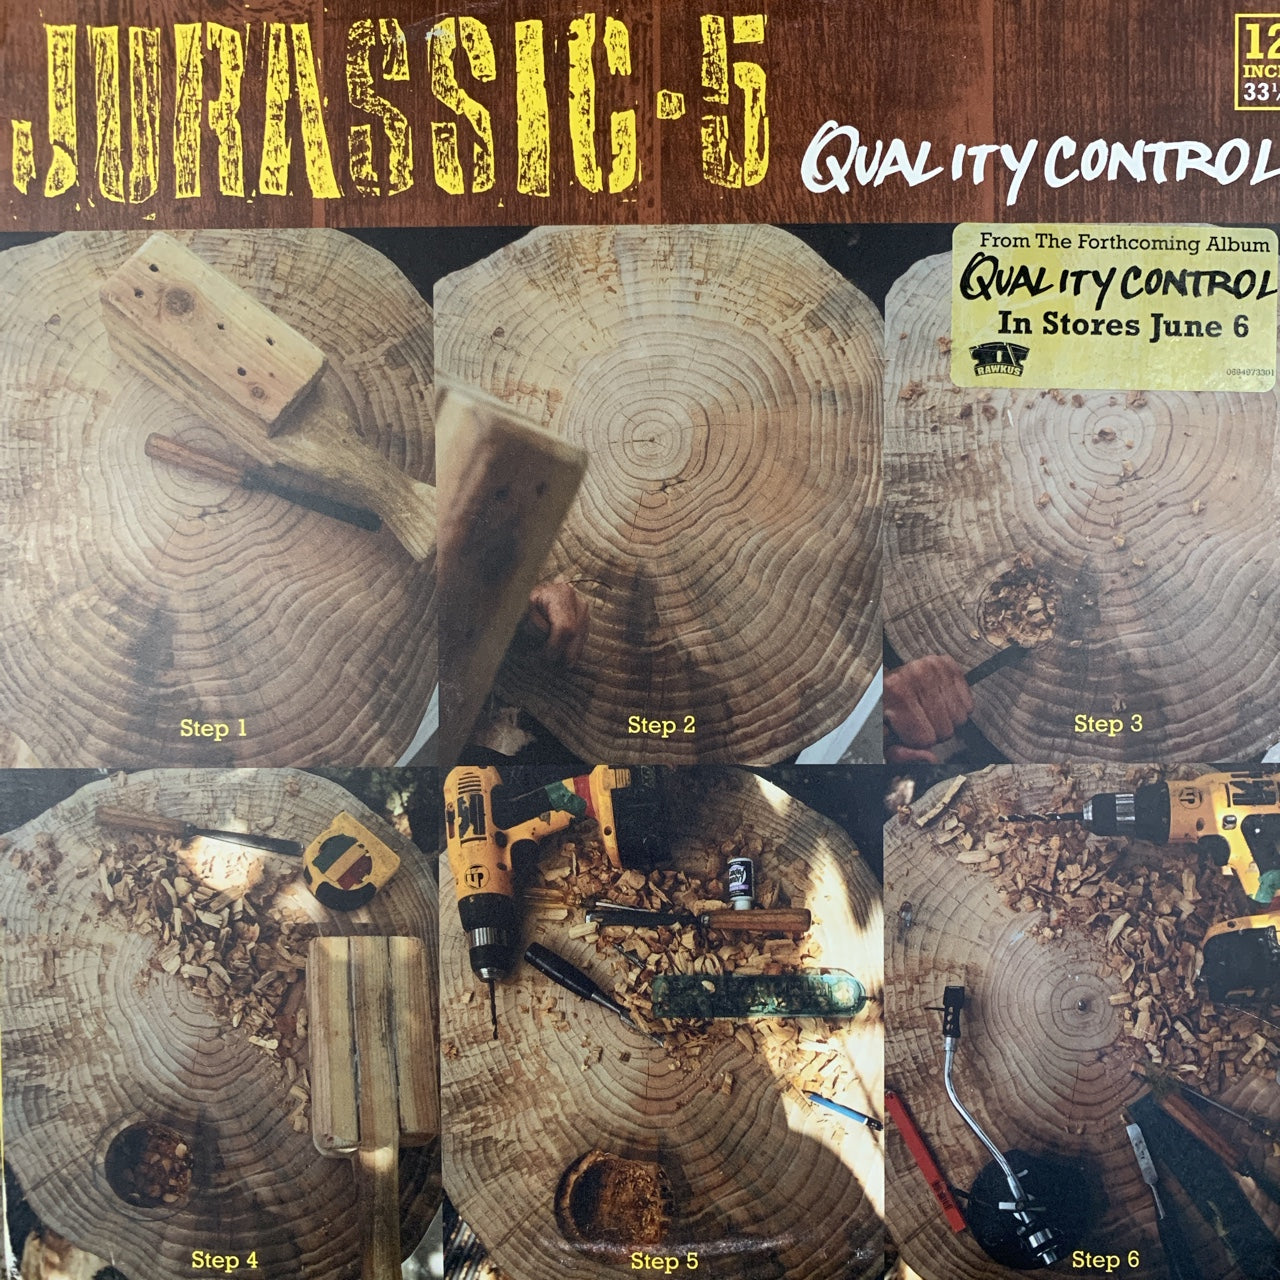 Jurassic-5 “Quality Control"